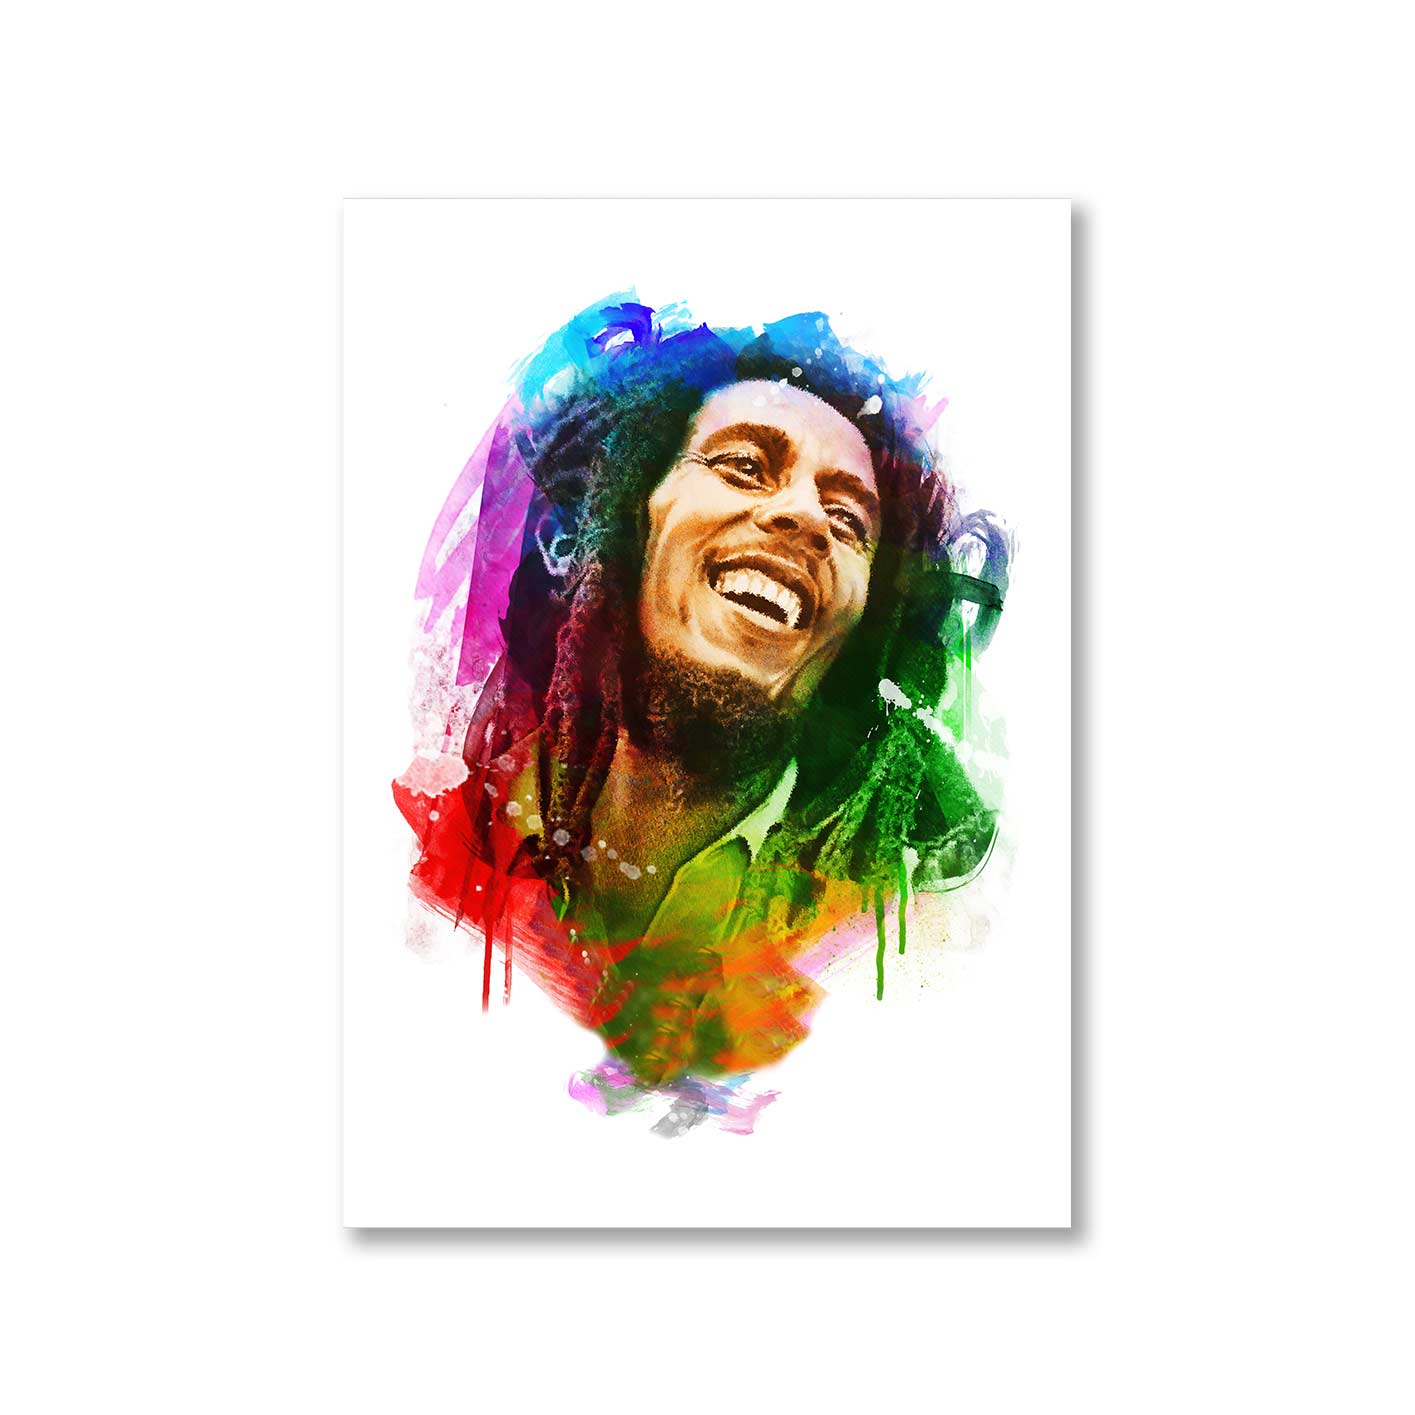 Bob Marley Poster - The Pioneer of Reggae